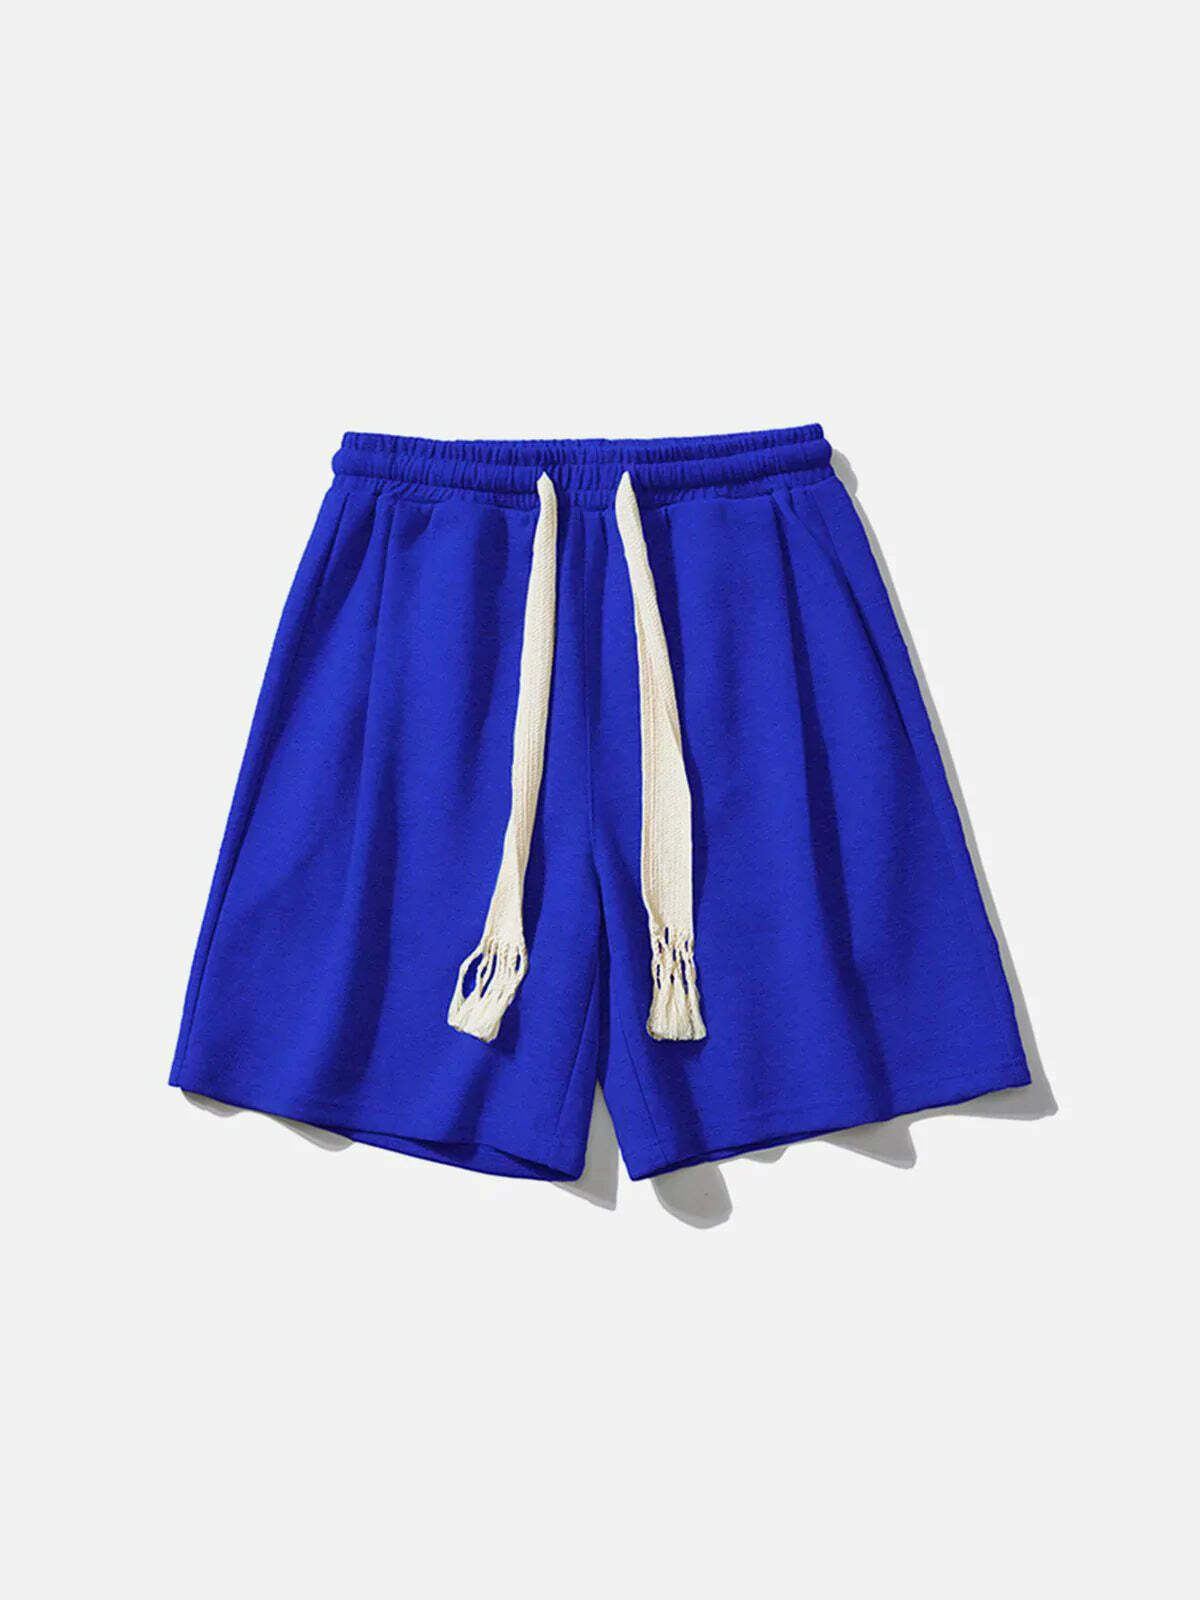 sleek drawstring shorts urban style essential 1359